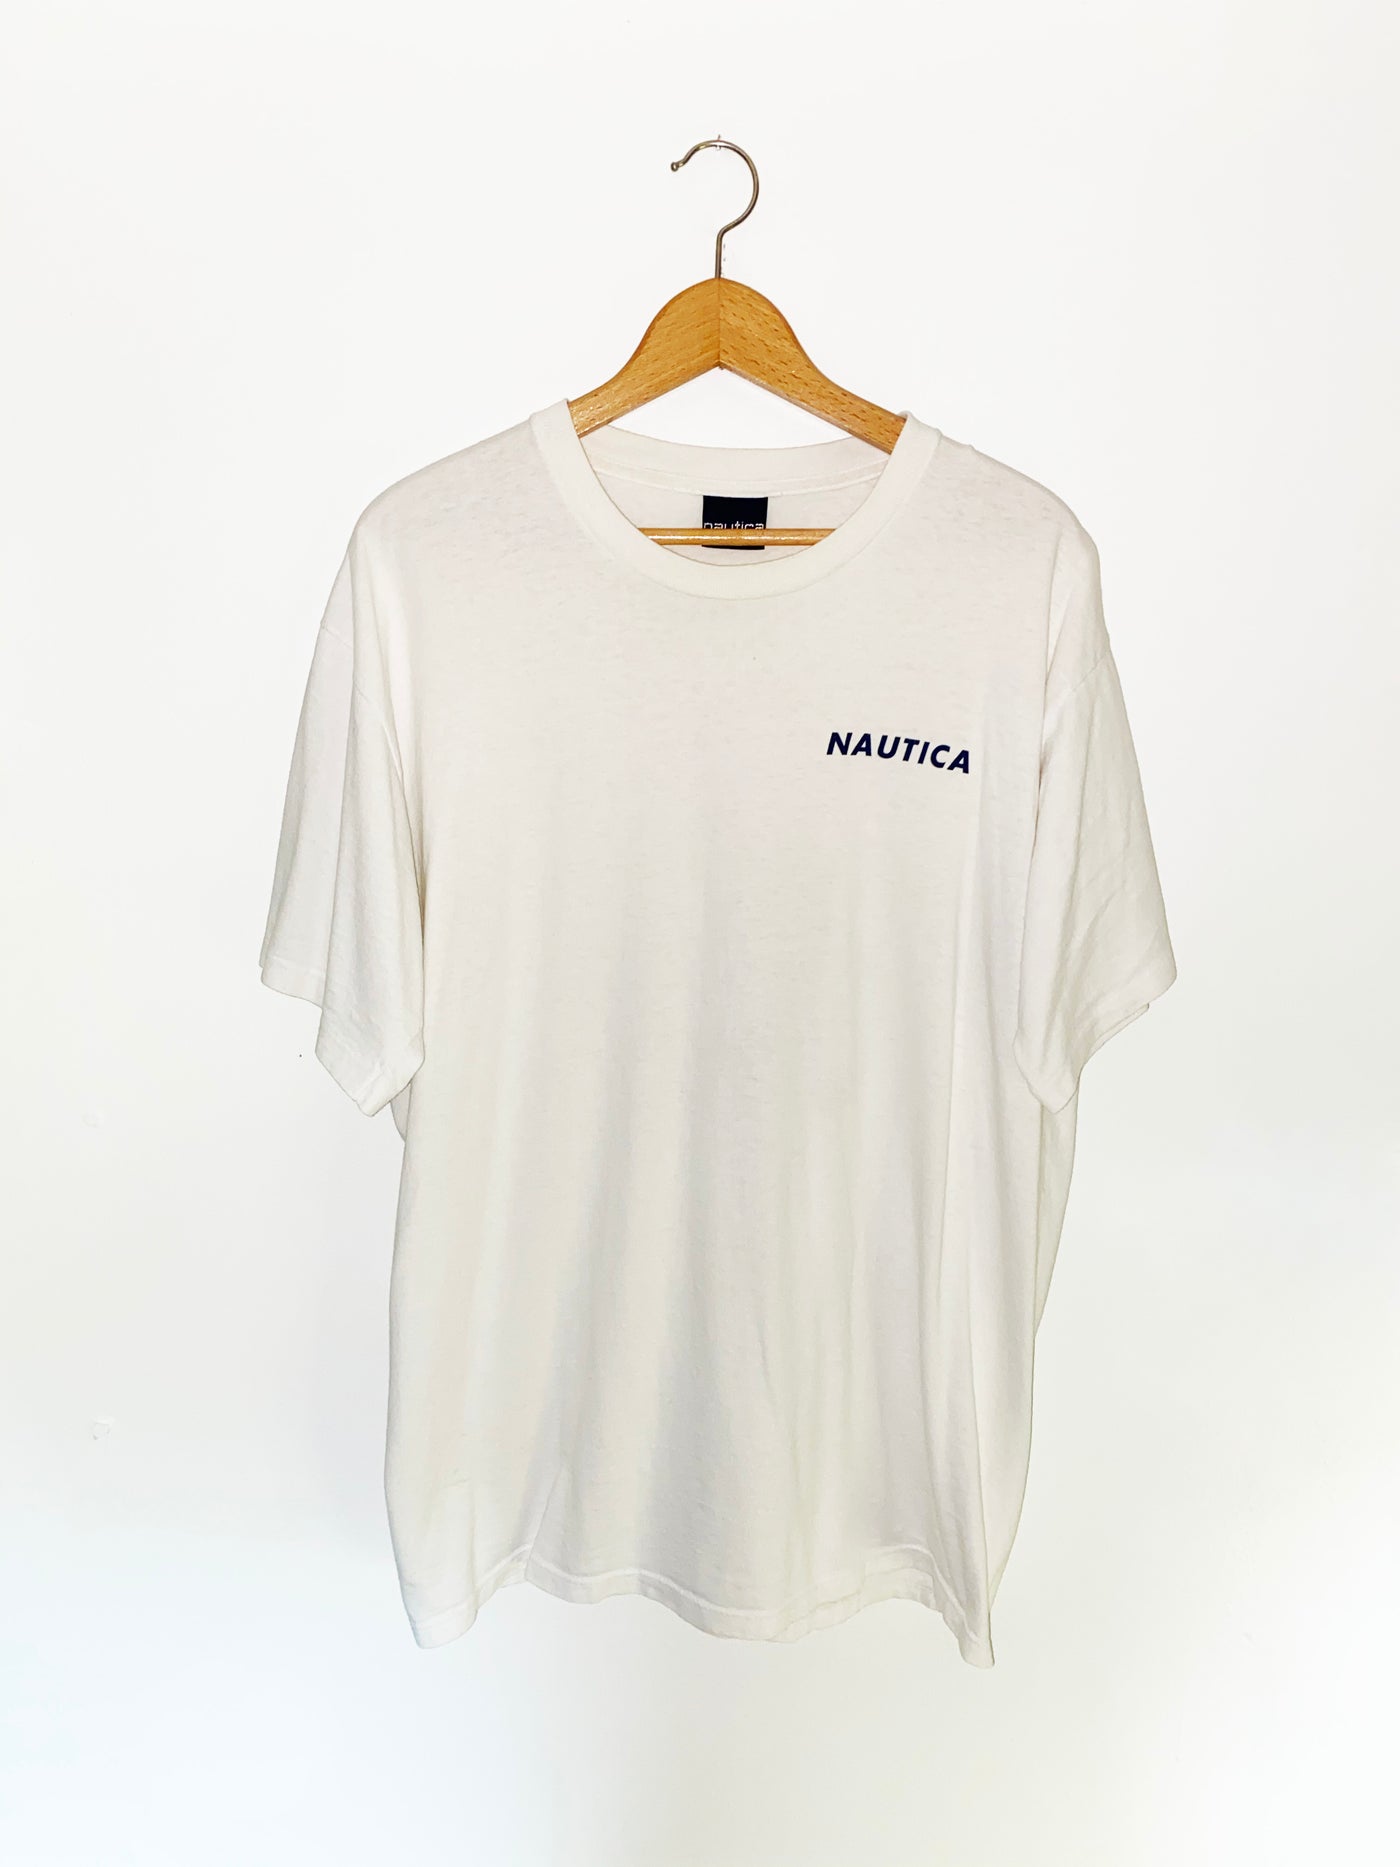 Vintage 90s Single Stitch Nautica T-Shirt